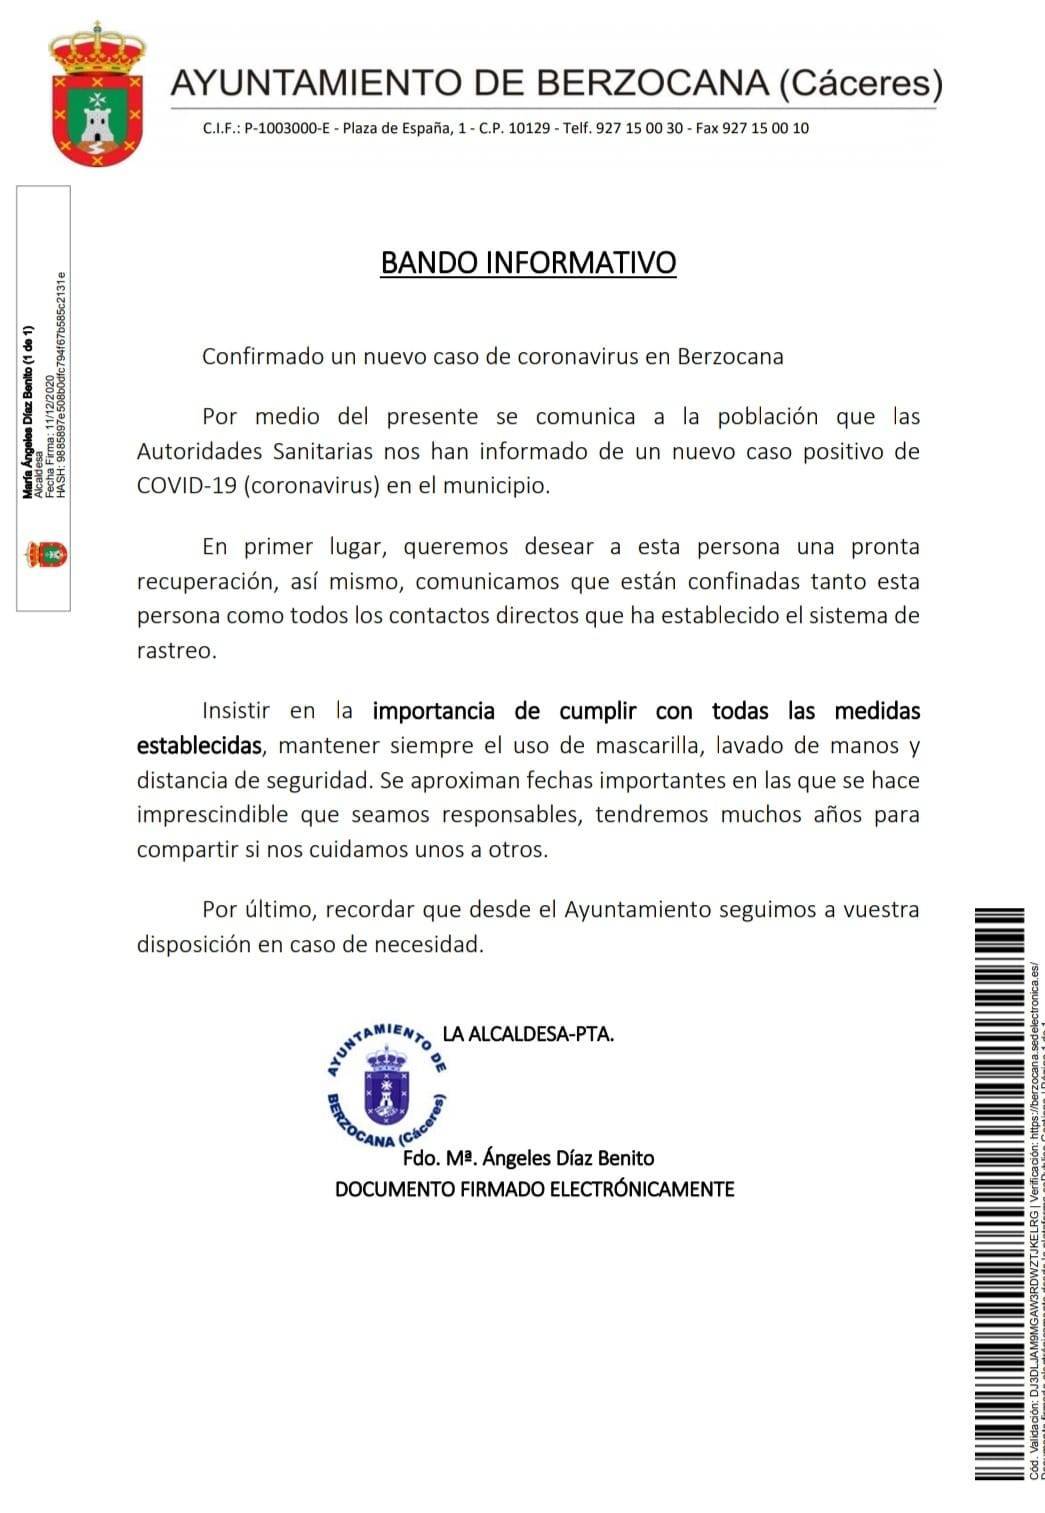 2 casos positivos de COVID-19 (diciembre 2020) - Berzocana (Cáceres) 1